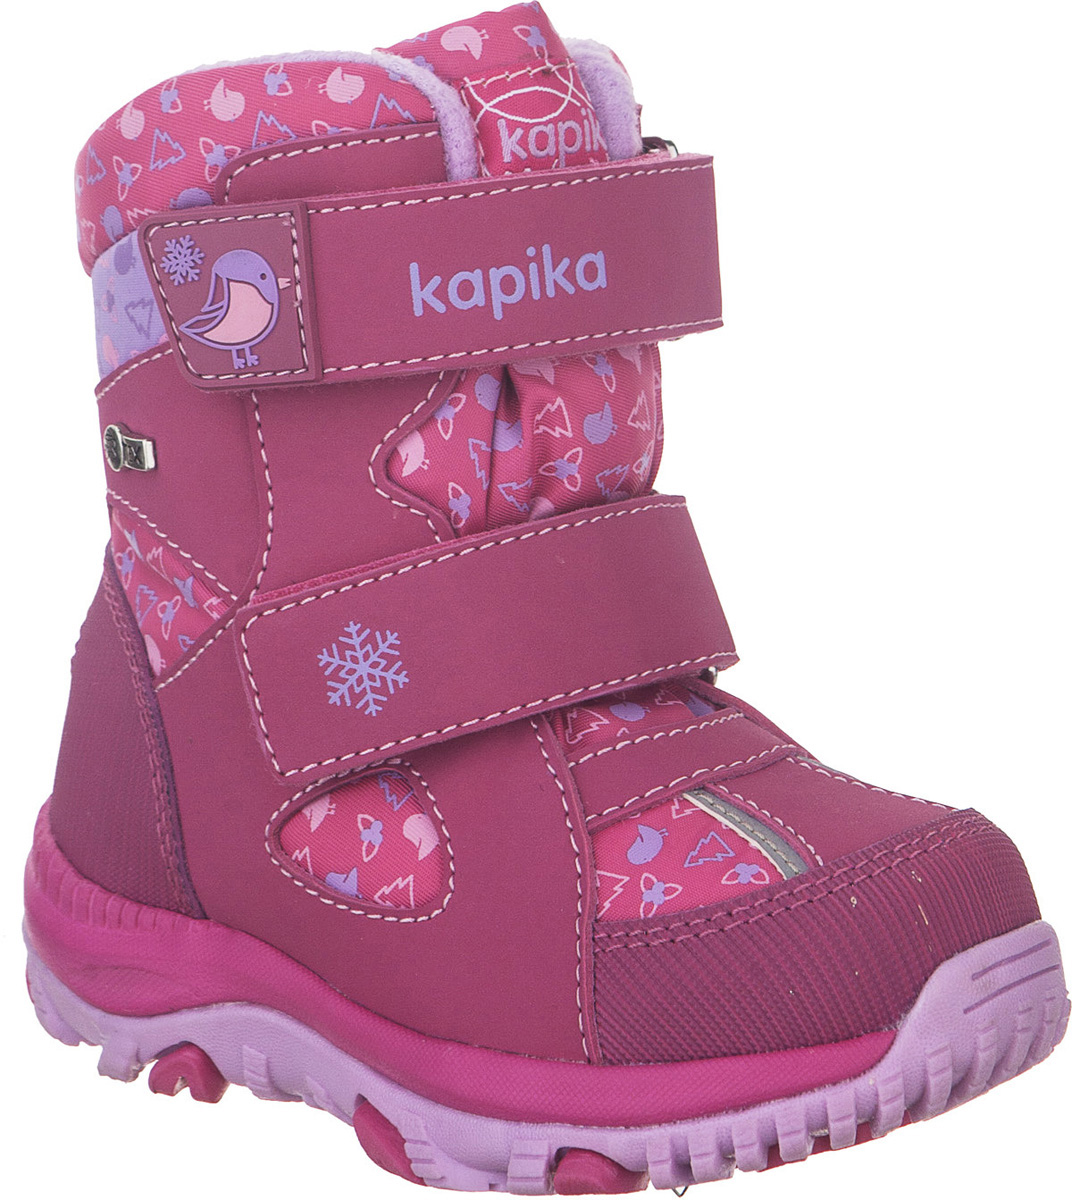 Ботинки для девочки Kapika KapiTEX, цвет: фуксия. 41223-2. Размер 26